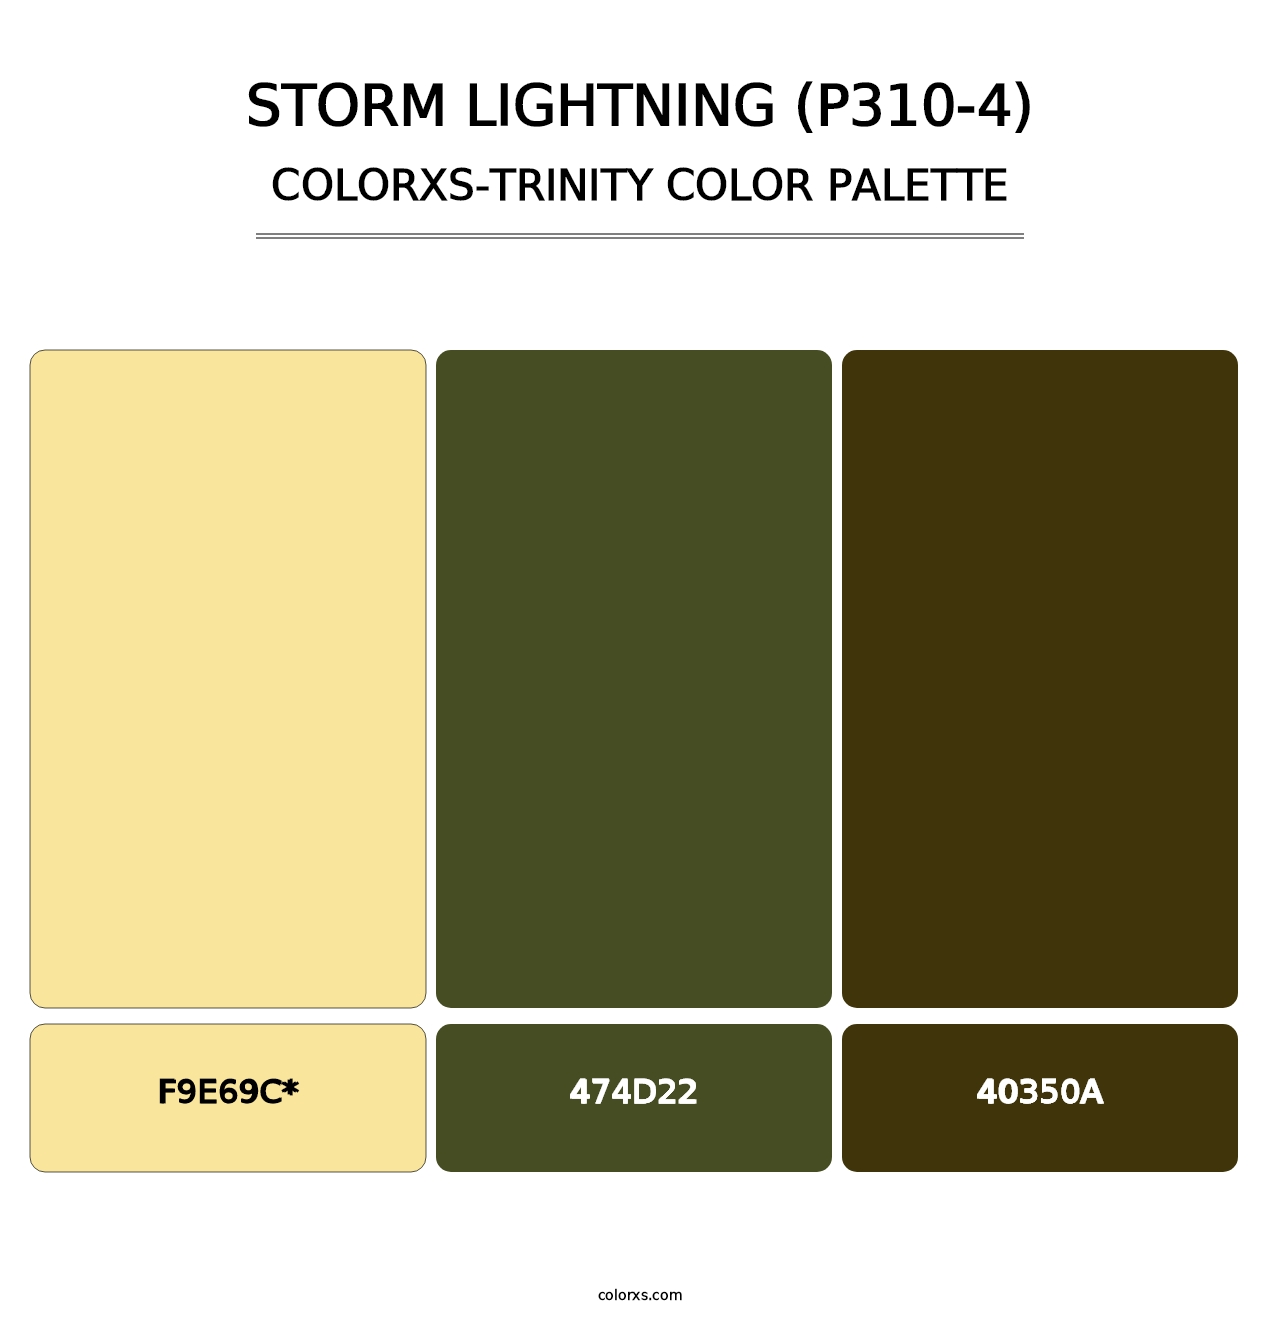 Storm Lightning (P310-4) - Colorxs Trinity Palette